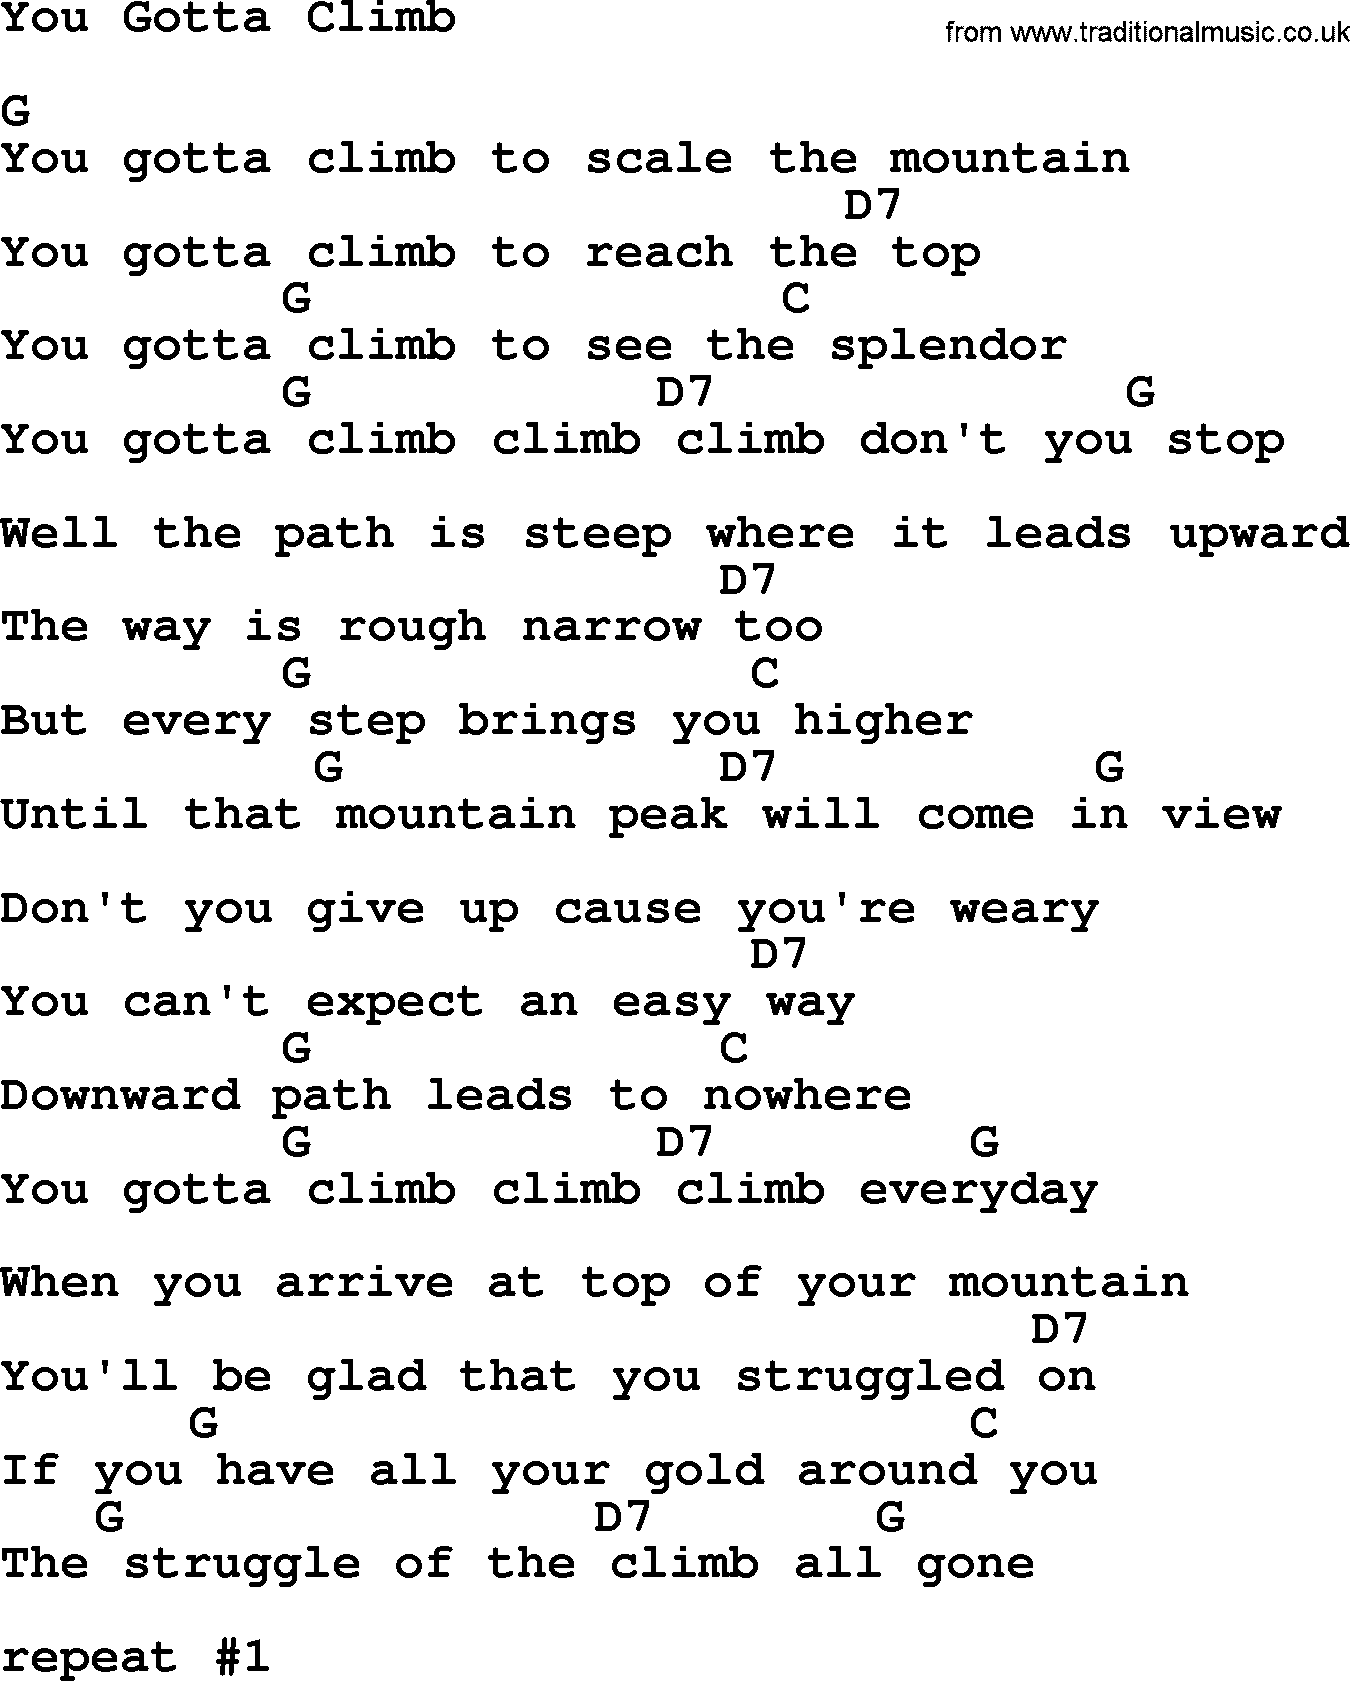 Marty Robbins song: You Gotta Climb, lyrics and chords